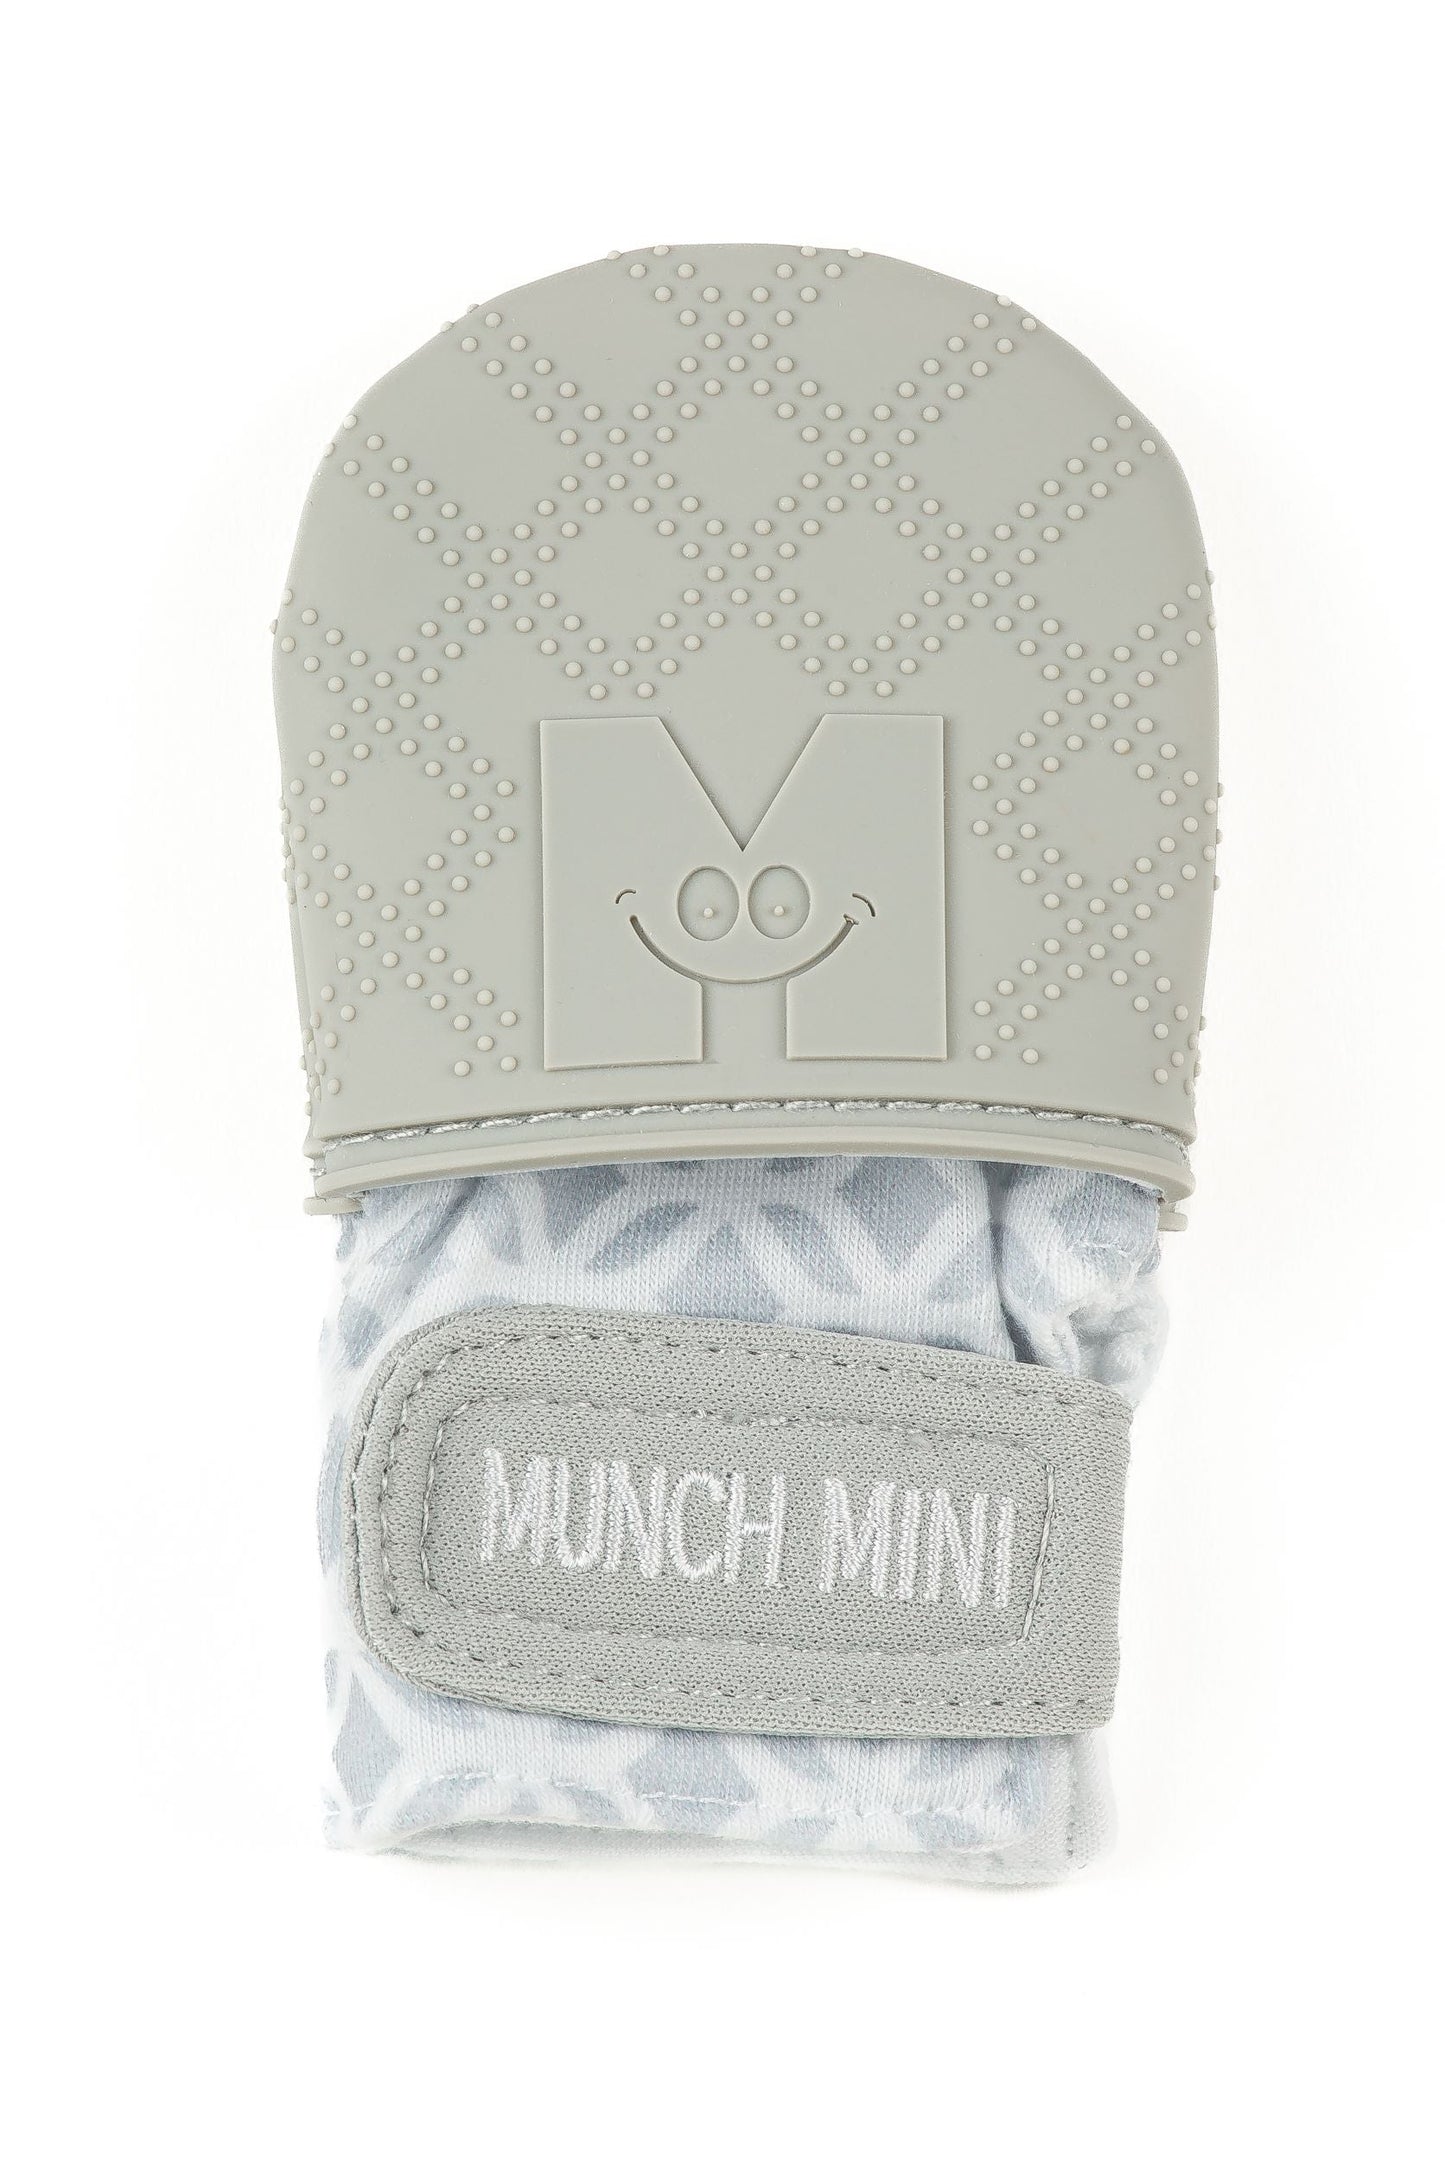 Munch Minis - Teething & Anti-scratch mitts - Grey Geo Pacifiers & Teethers Malarkey Kids 